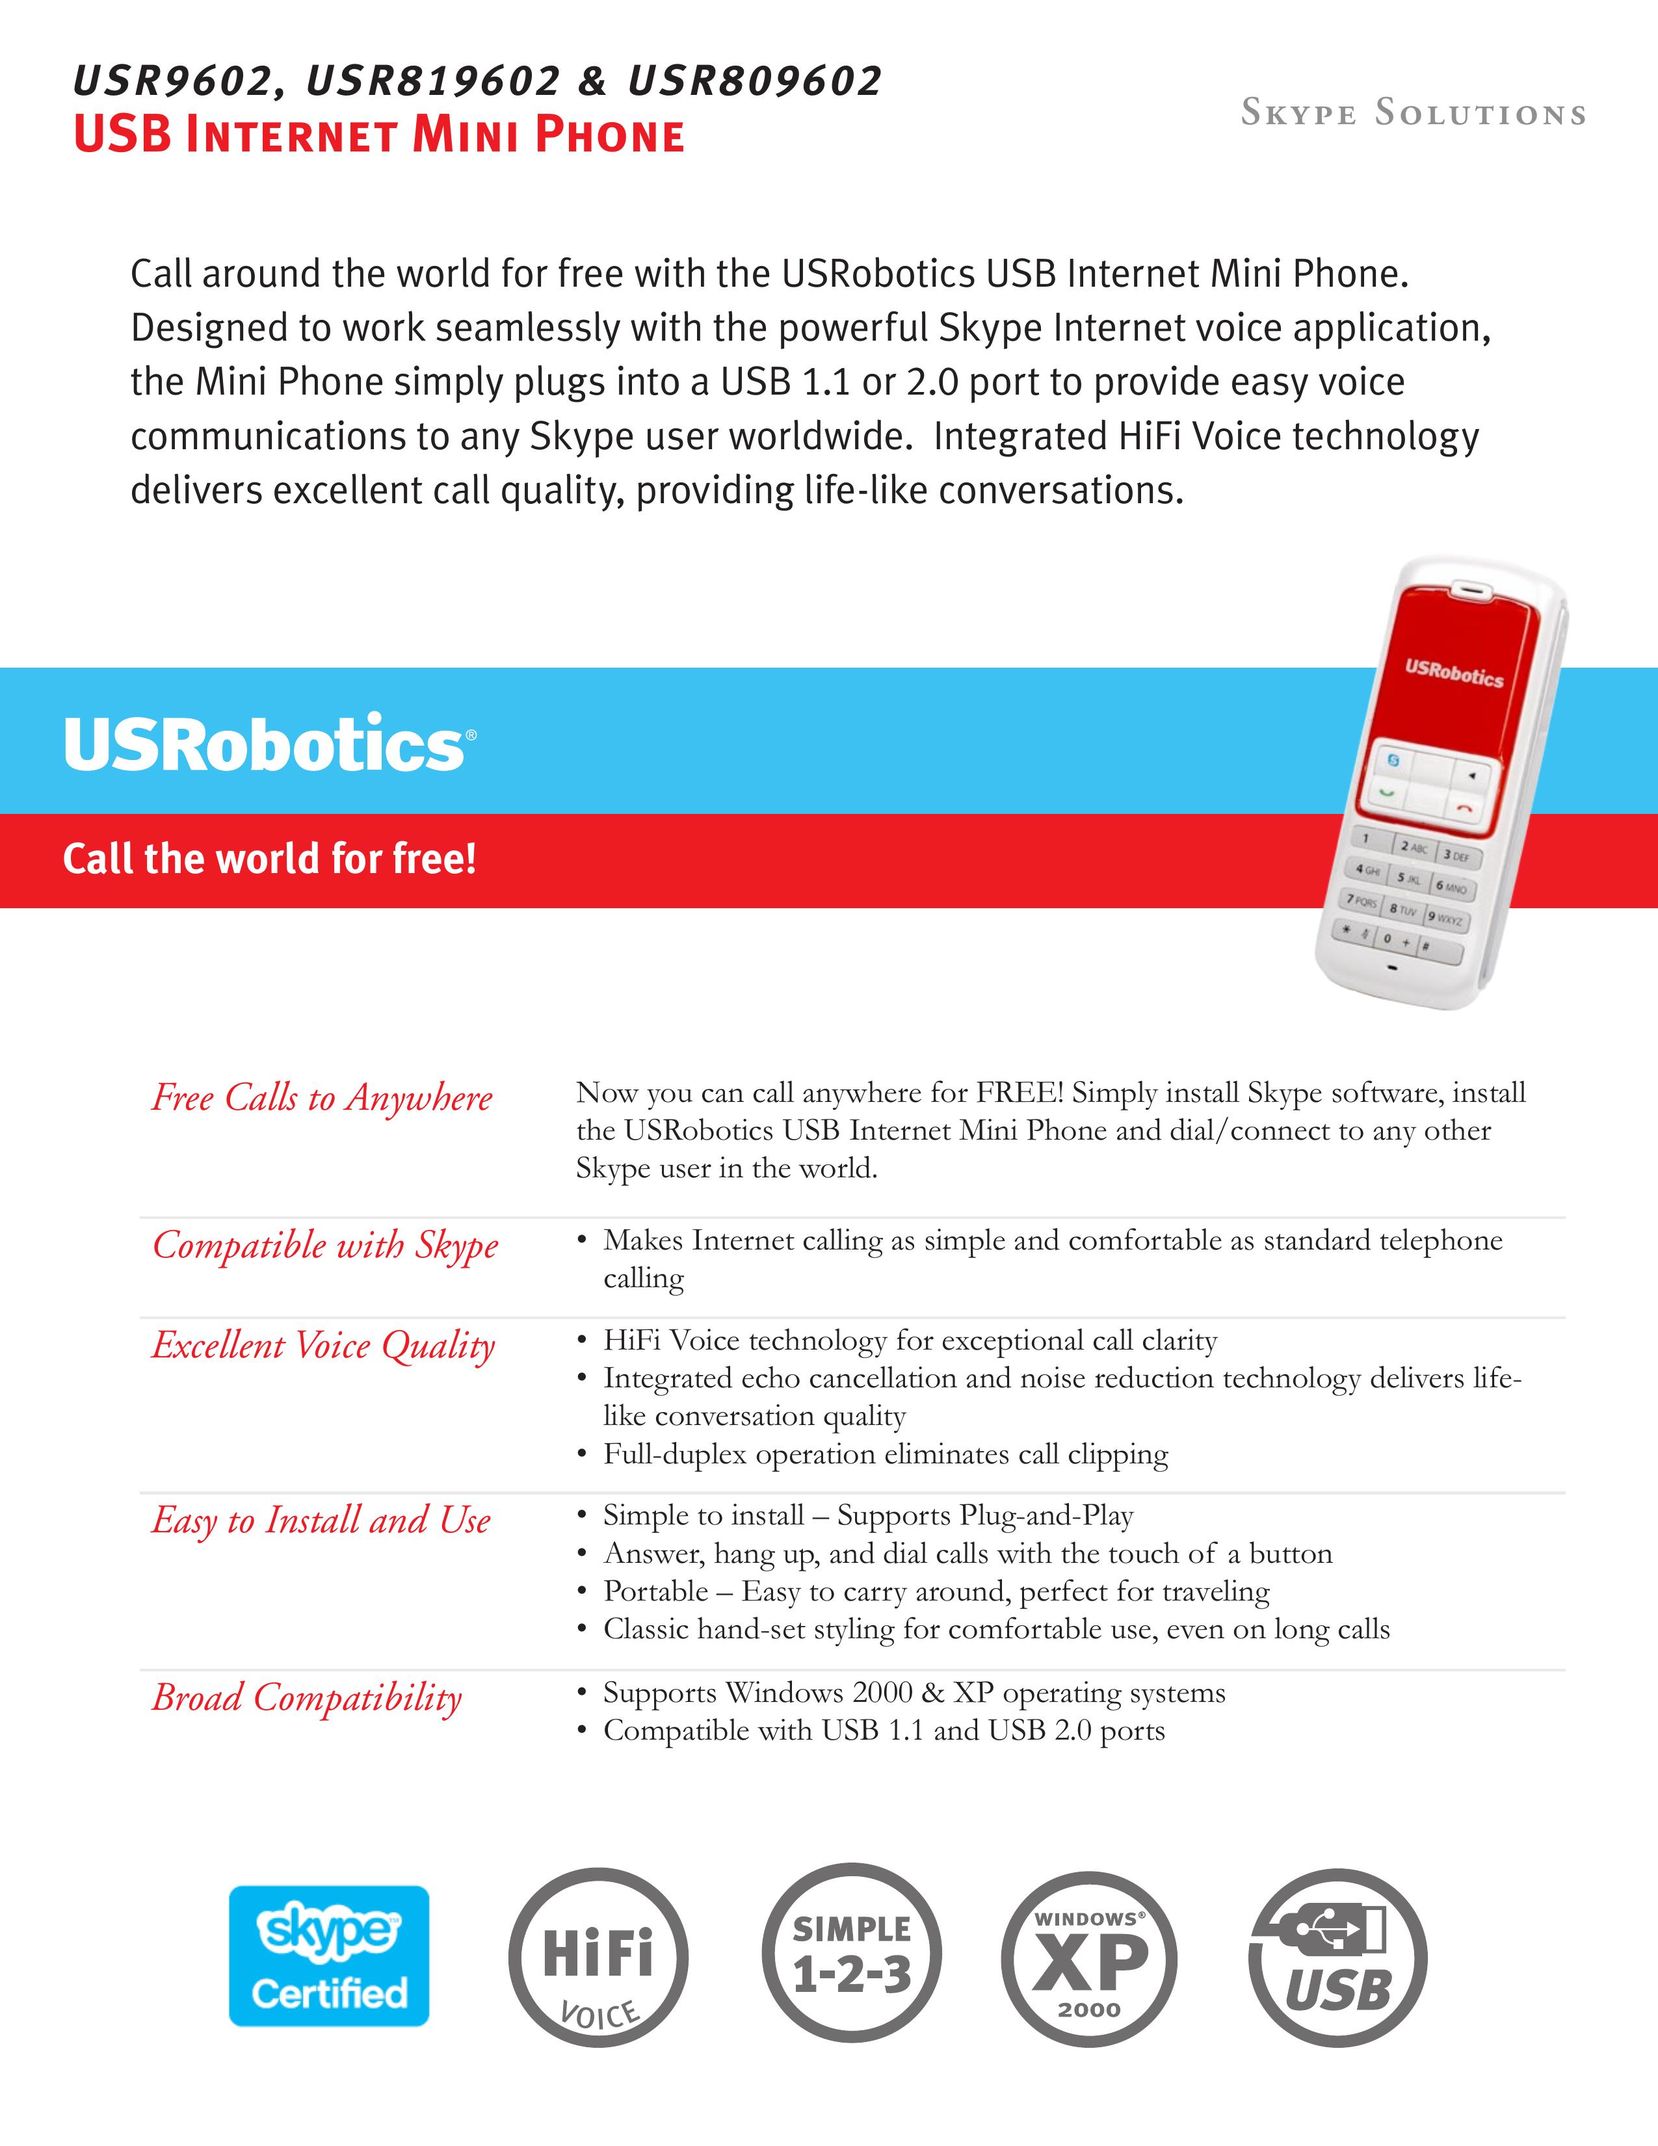 USRobotics USR9602 Cordless Telephone User Manual